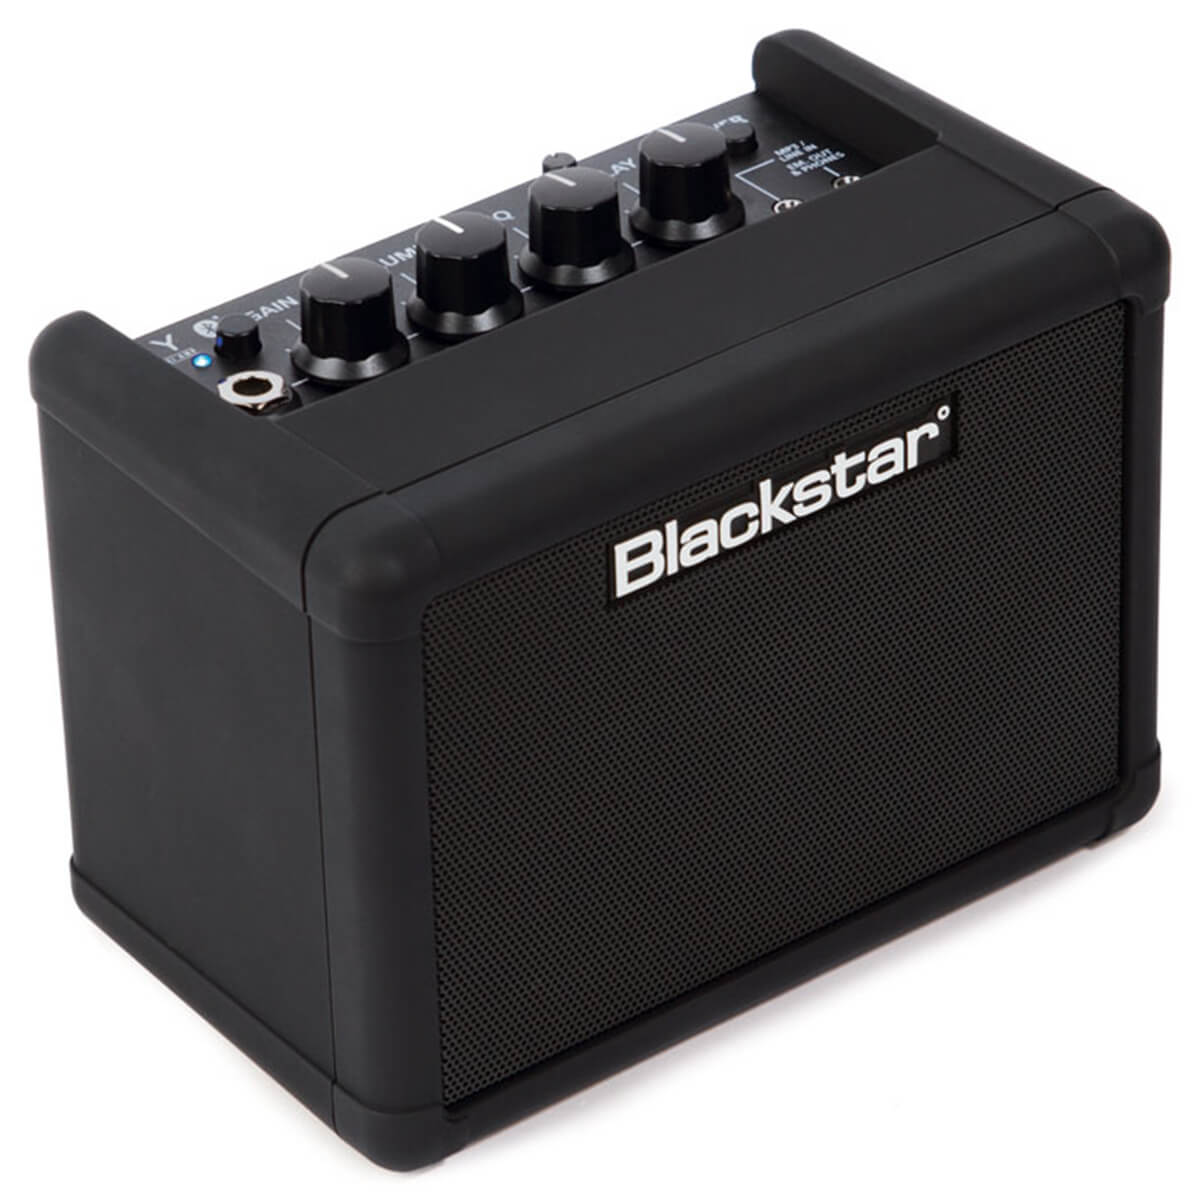 Blackstar Amps FLY 3 Bluetooth mini guitar amplifier right